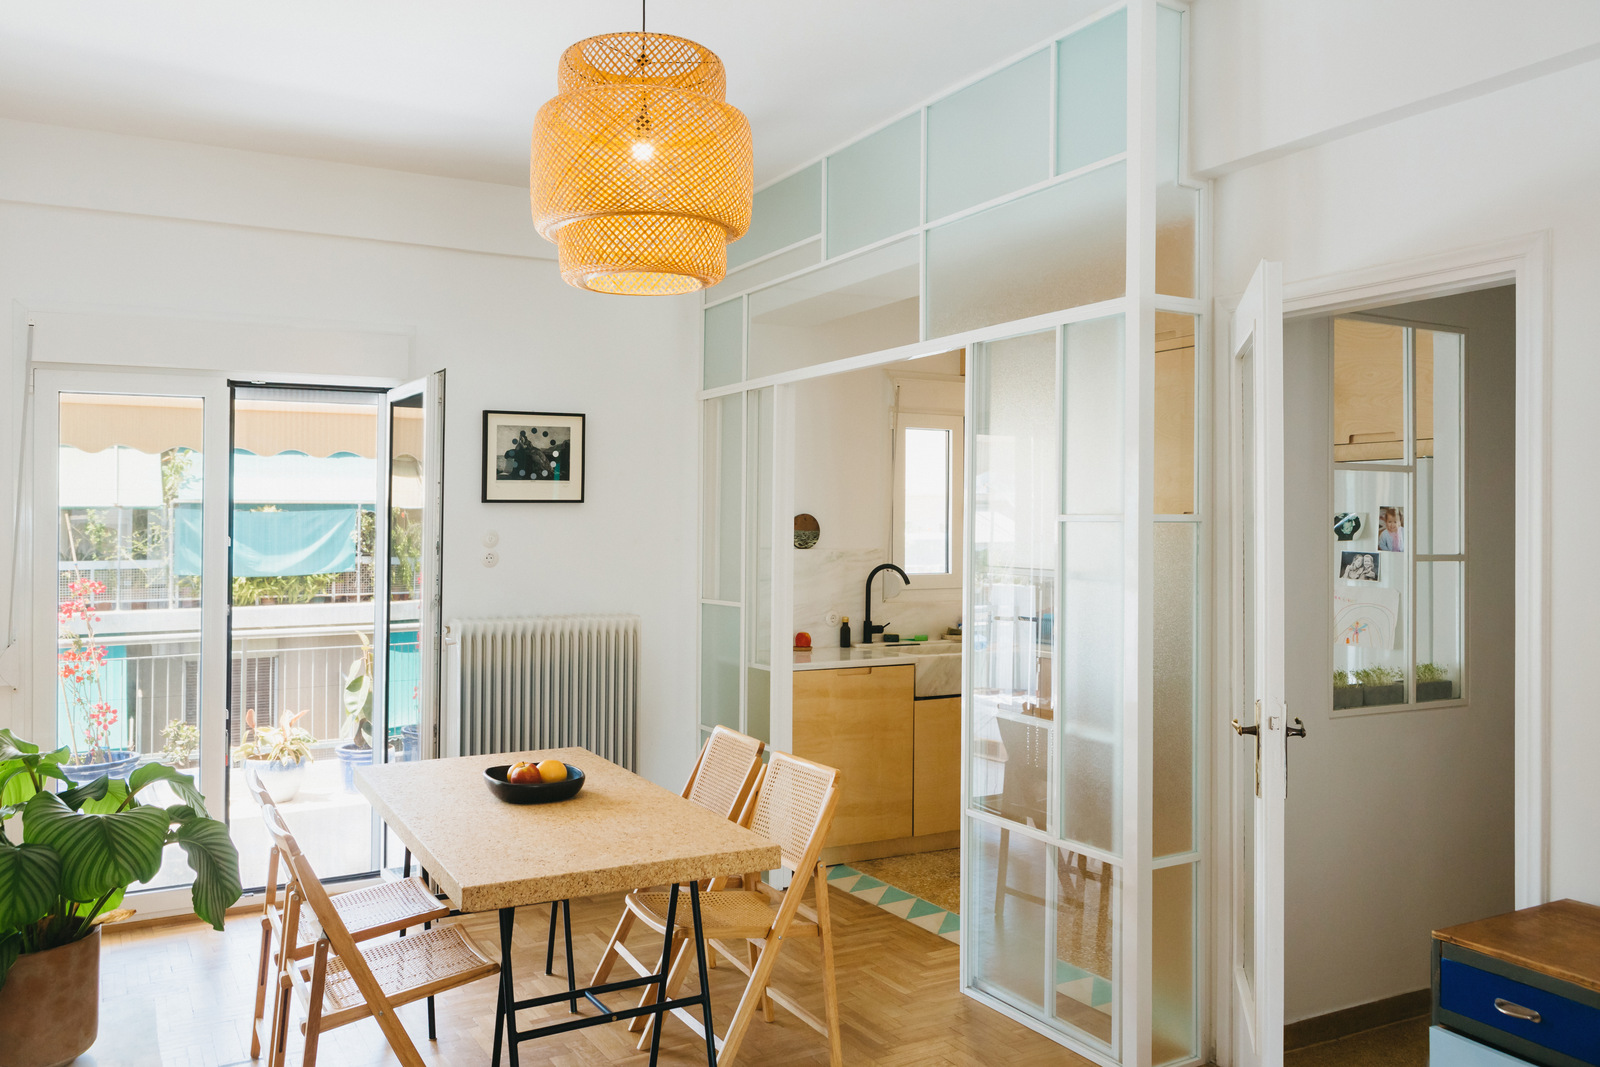 Archisearch Charlotte apartment renovation in Kypseli | Threshold architecture studio